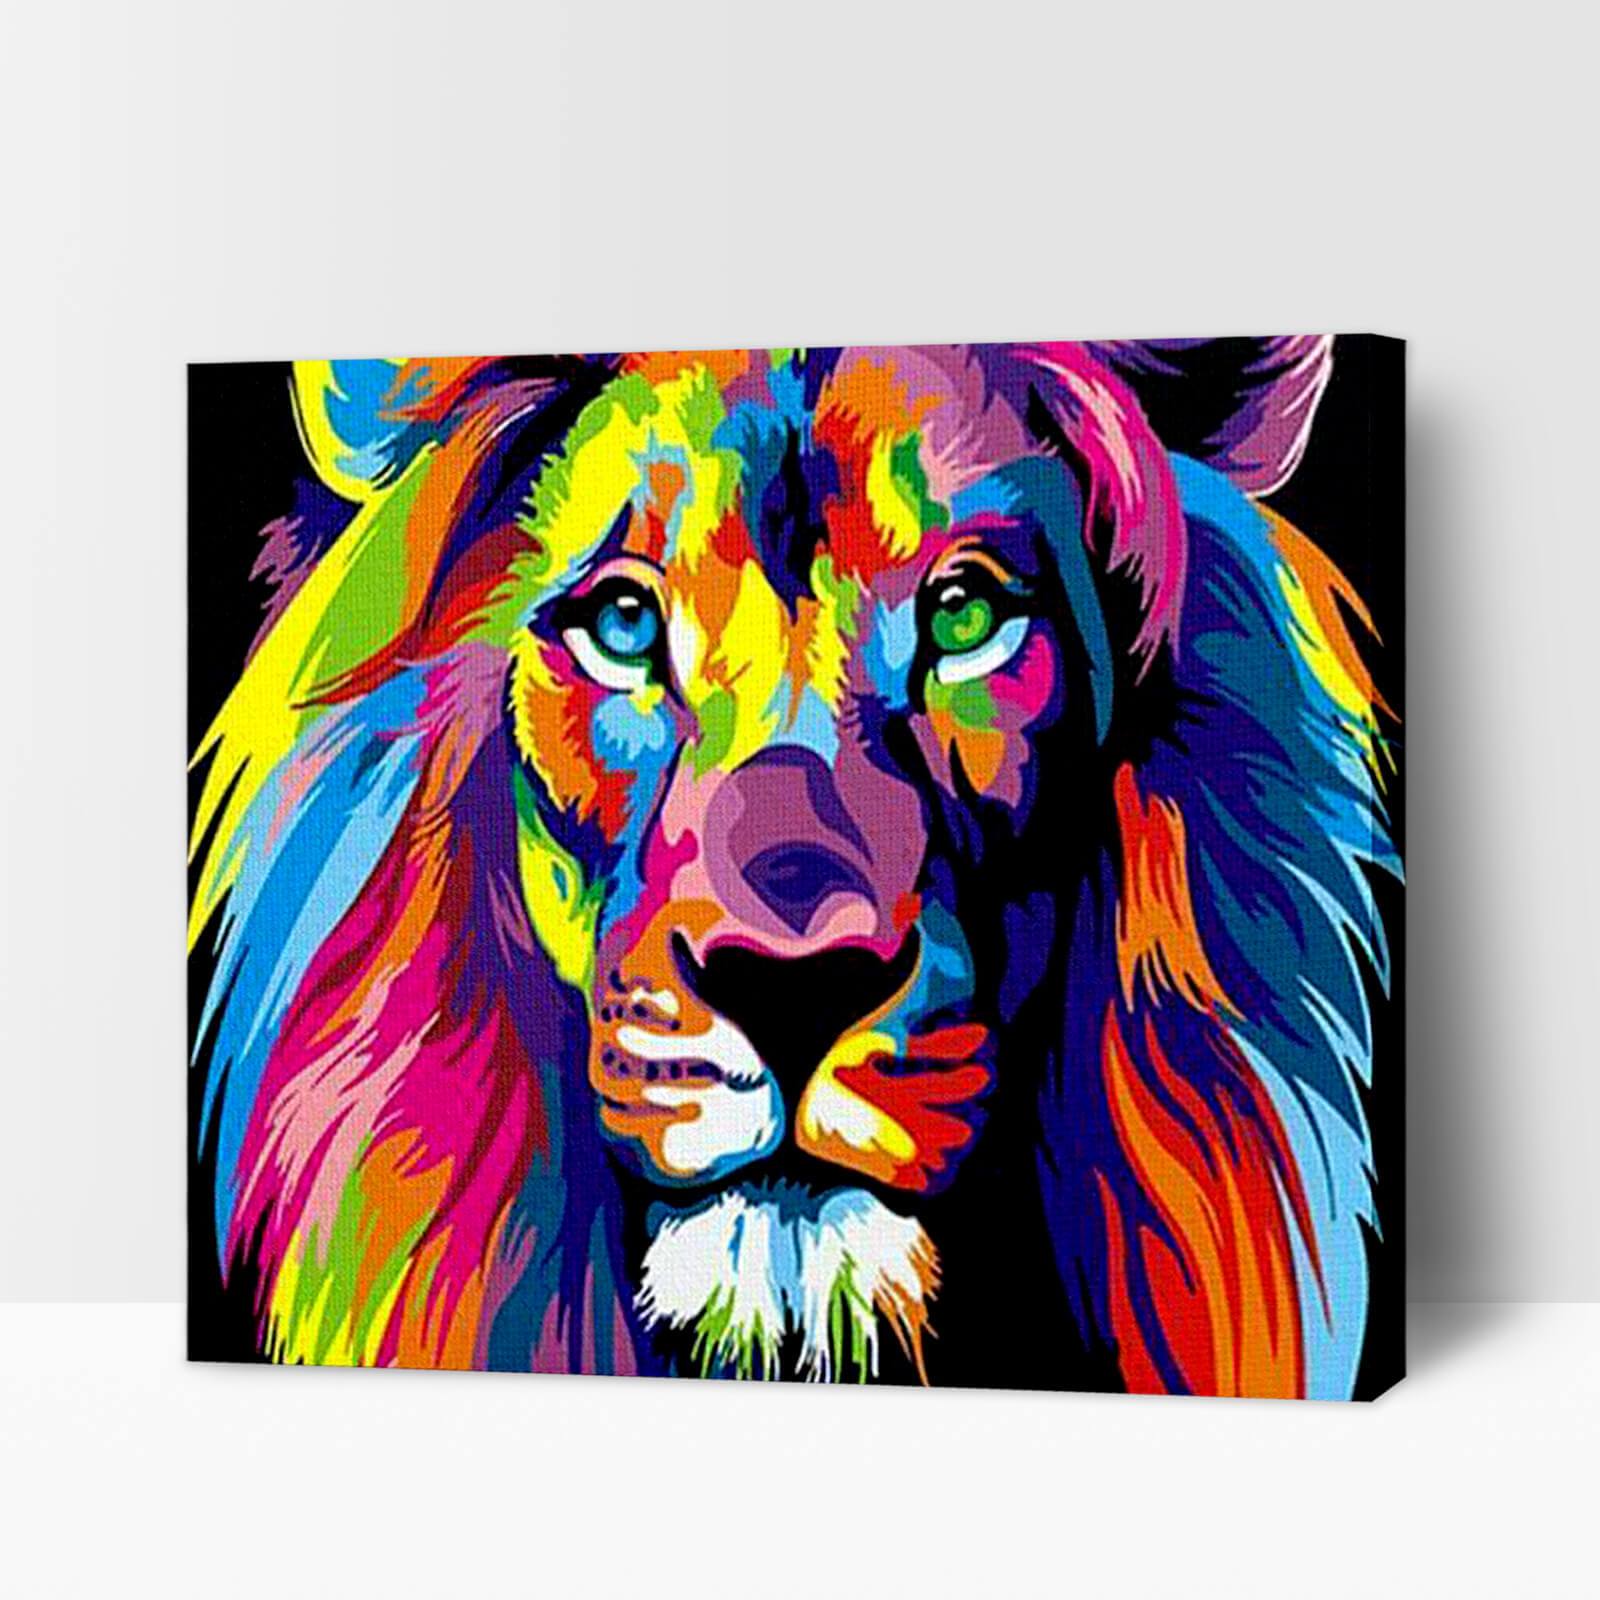 Compra el kit de león policromado para pintar por números - Pinta un cuadro